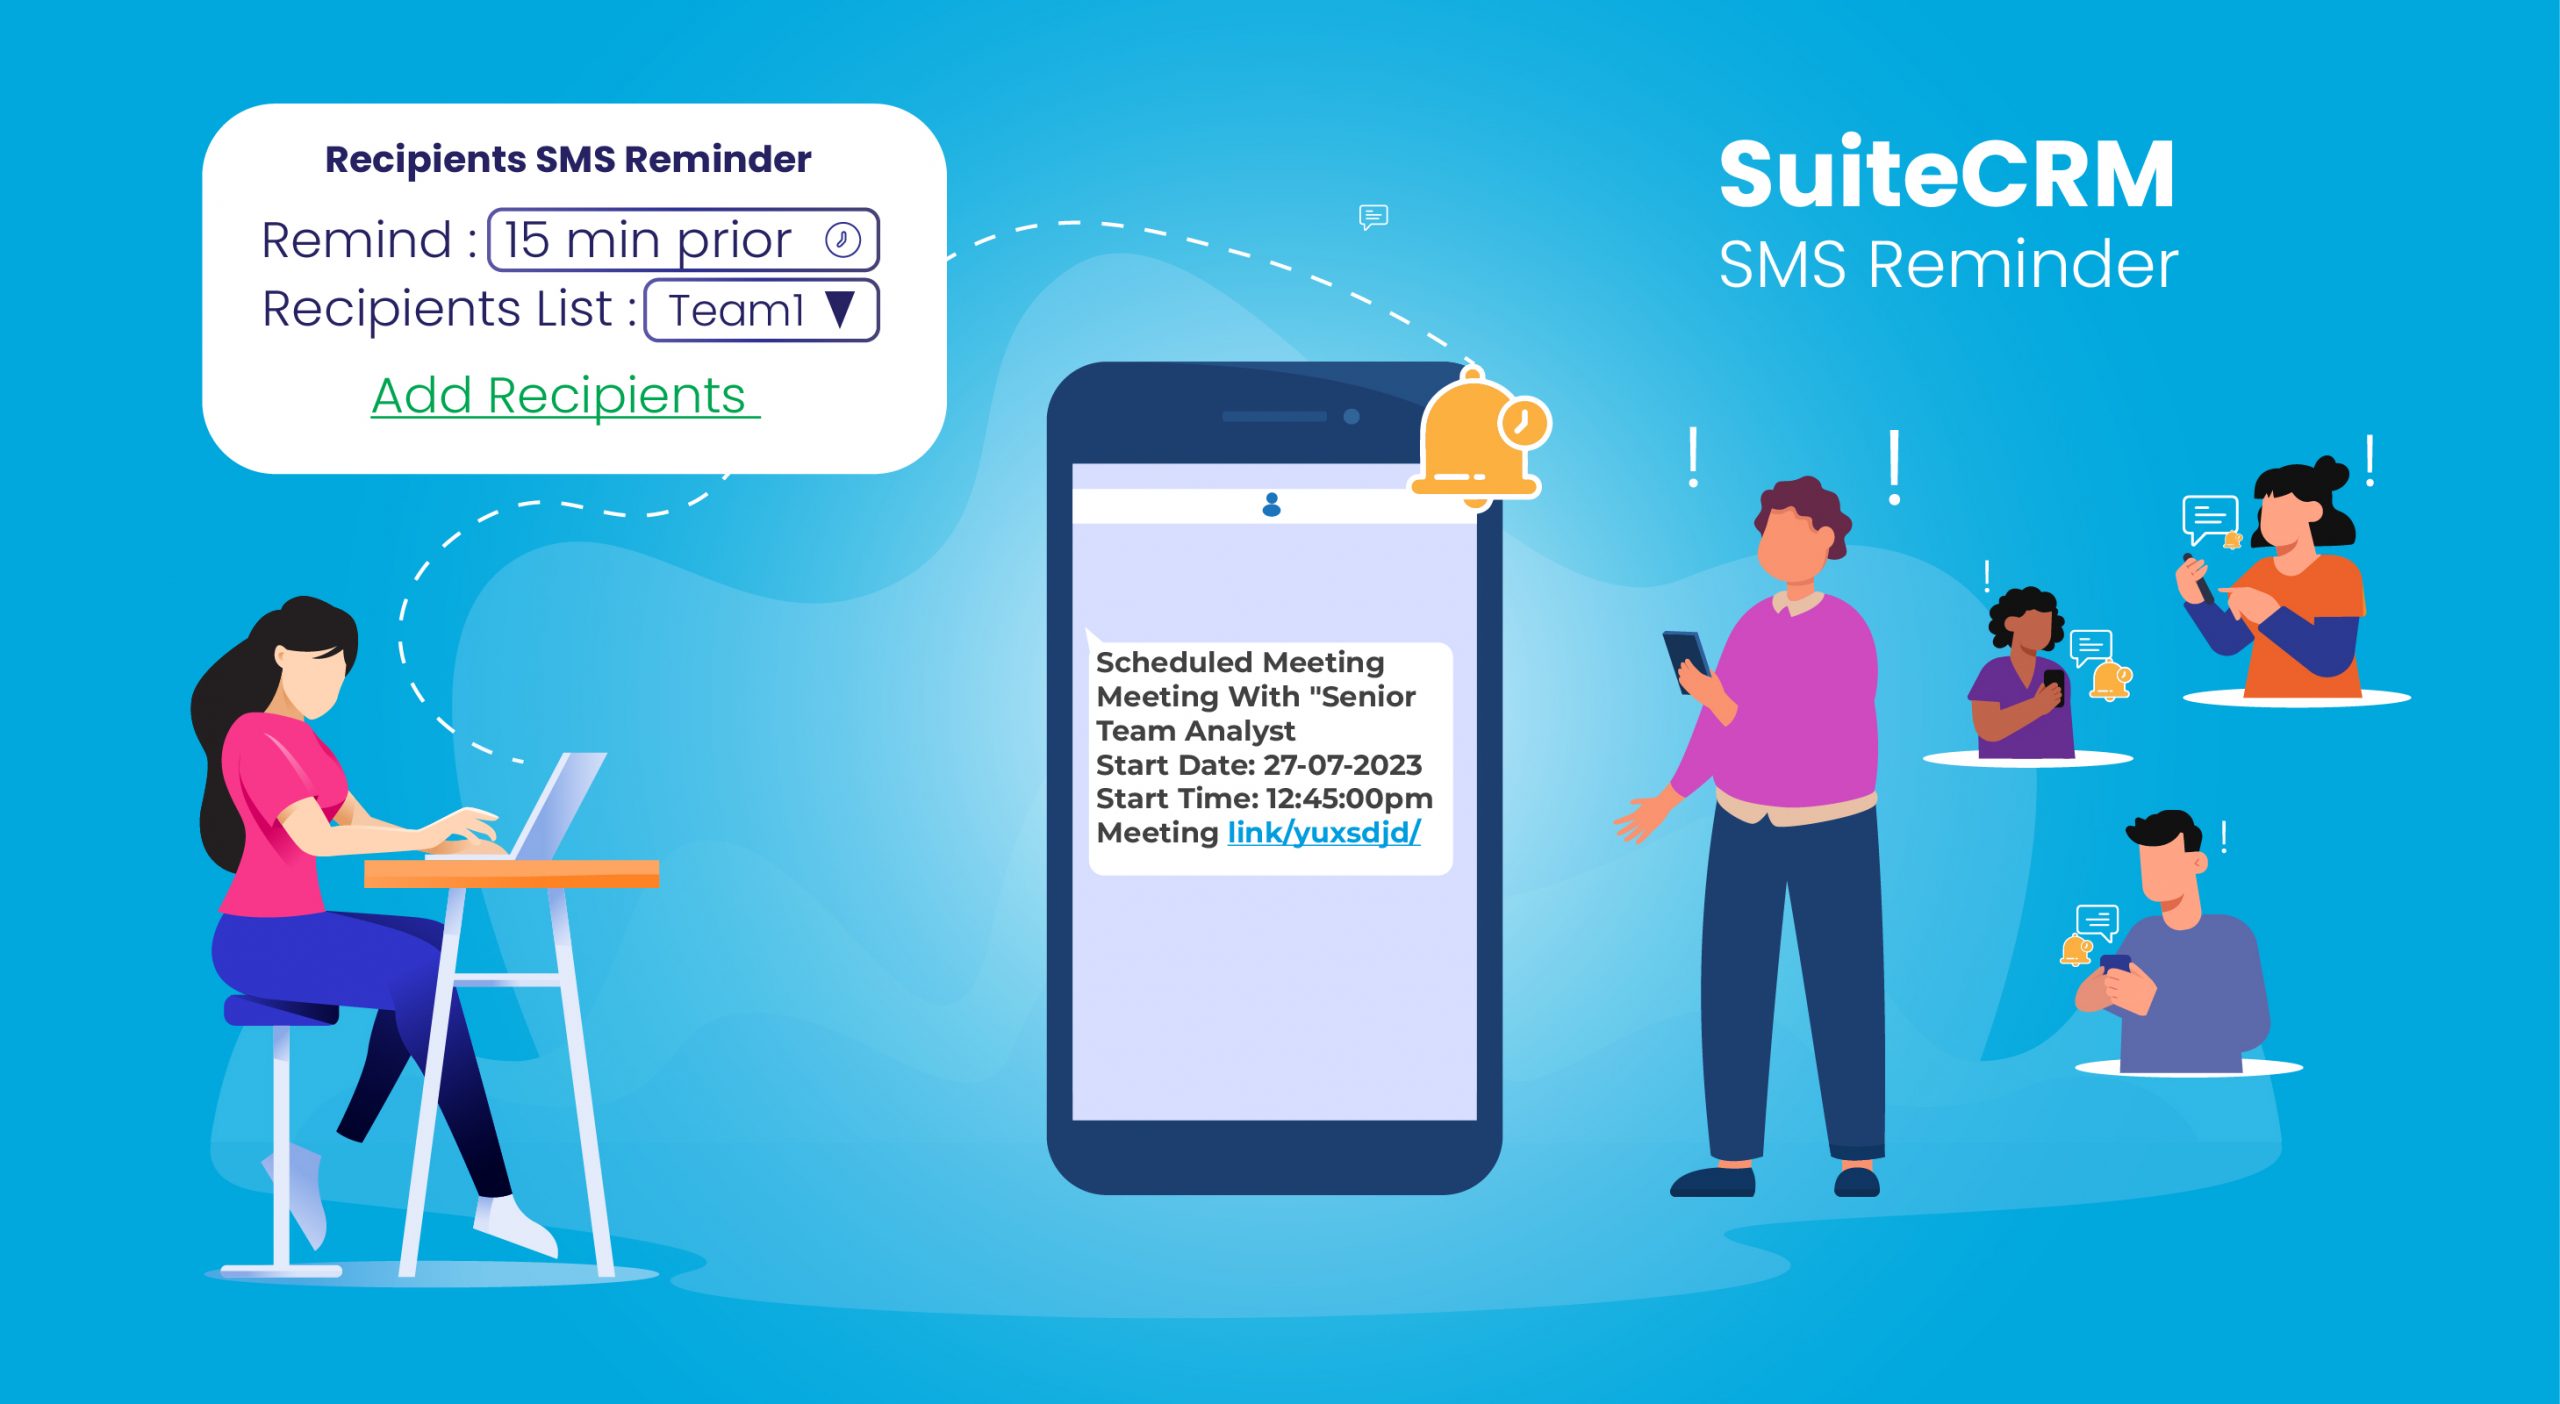 SuiteCRM SMS Reminder